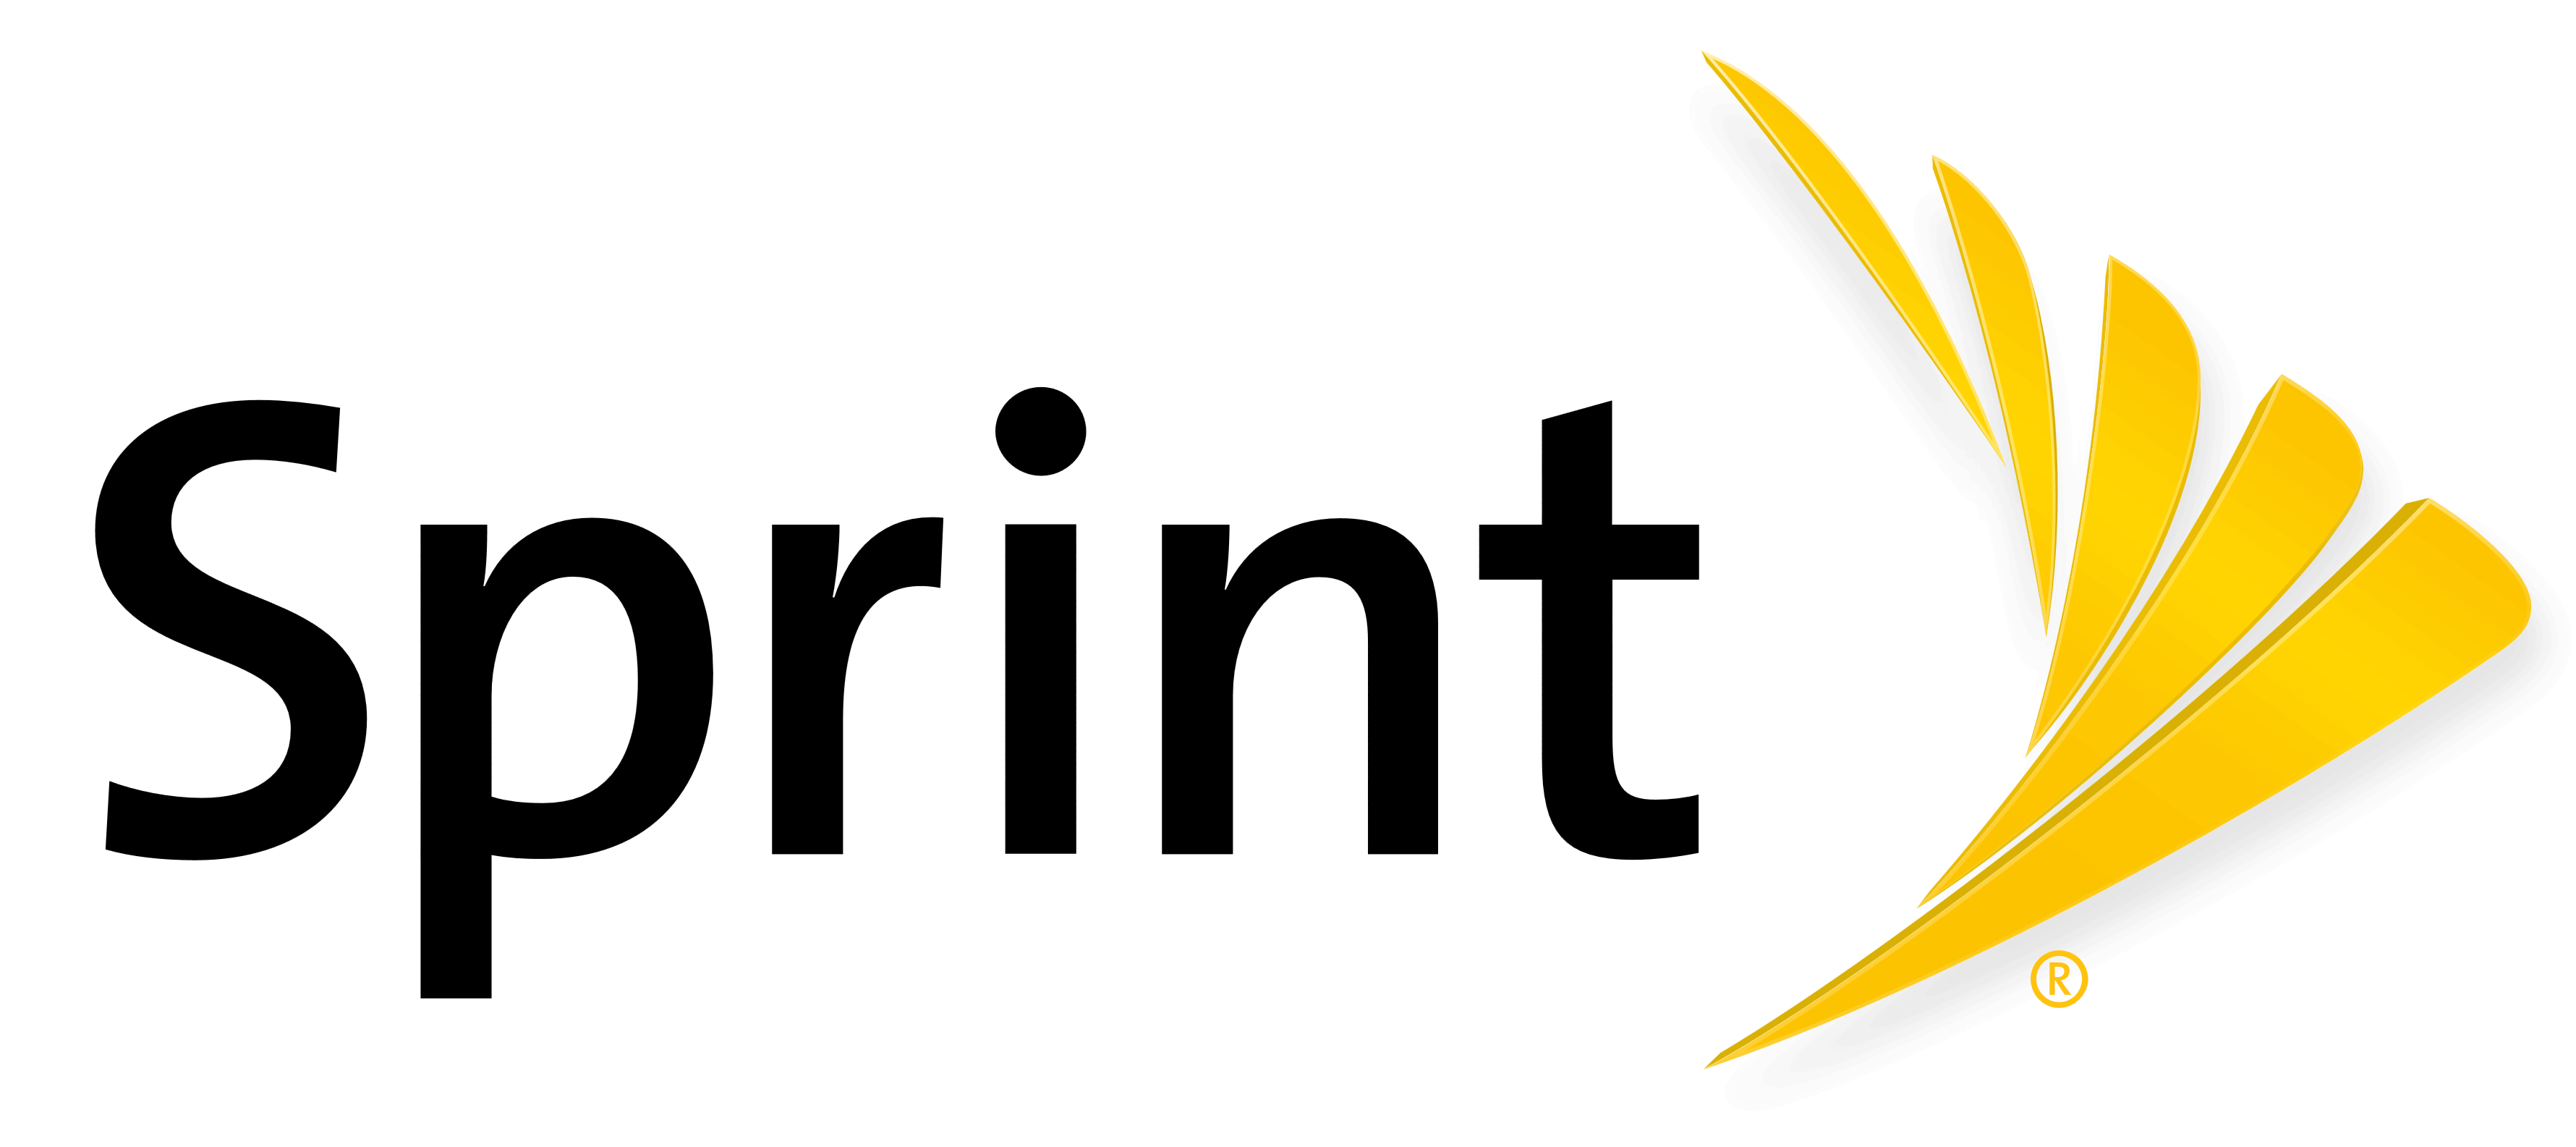 Sprint Corporation logo, logotype